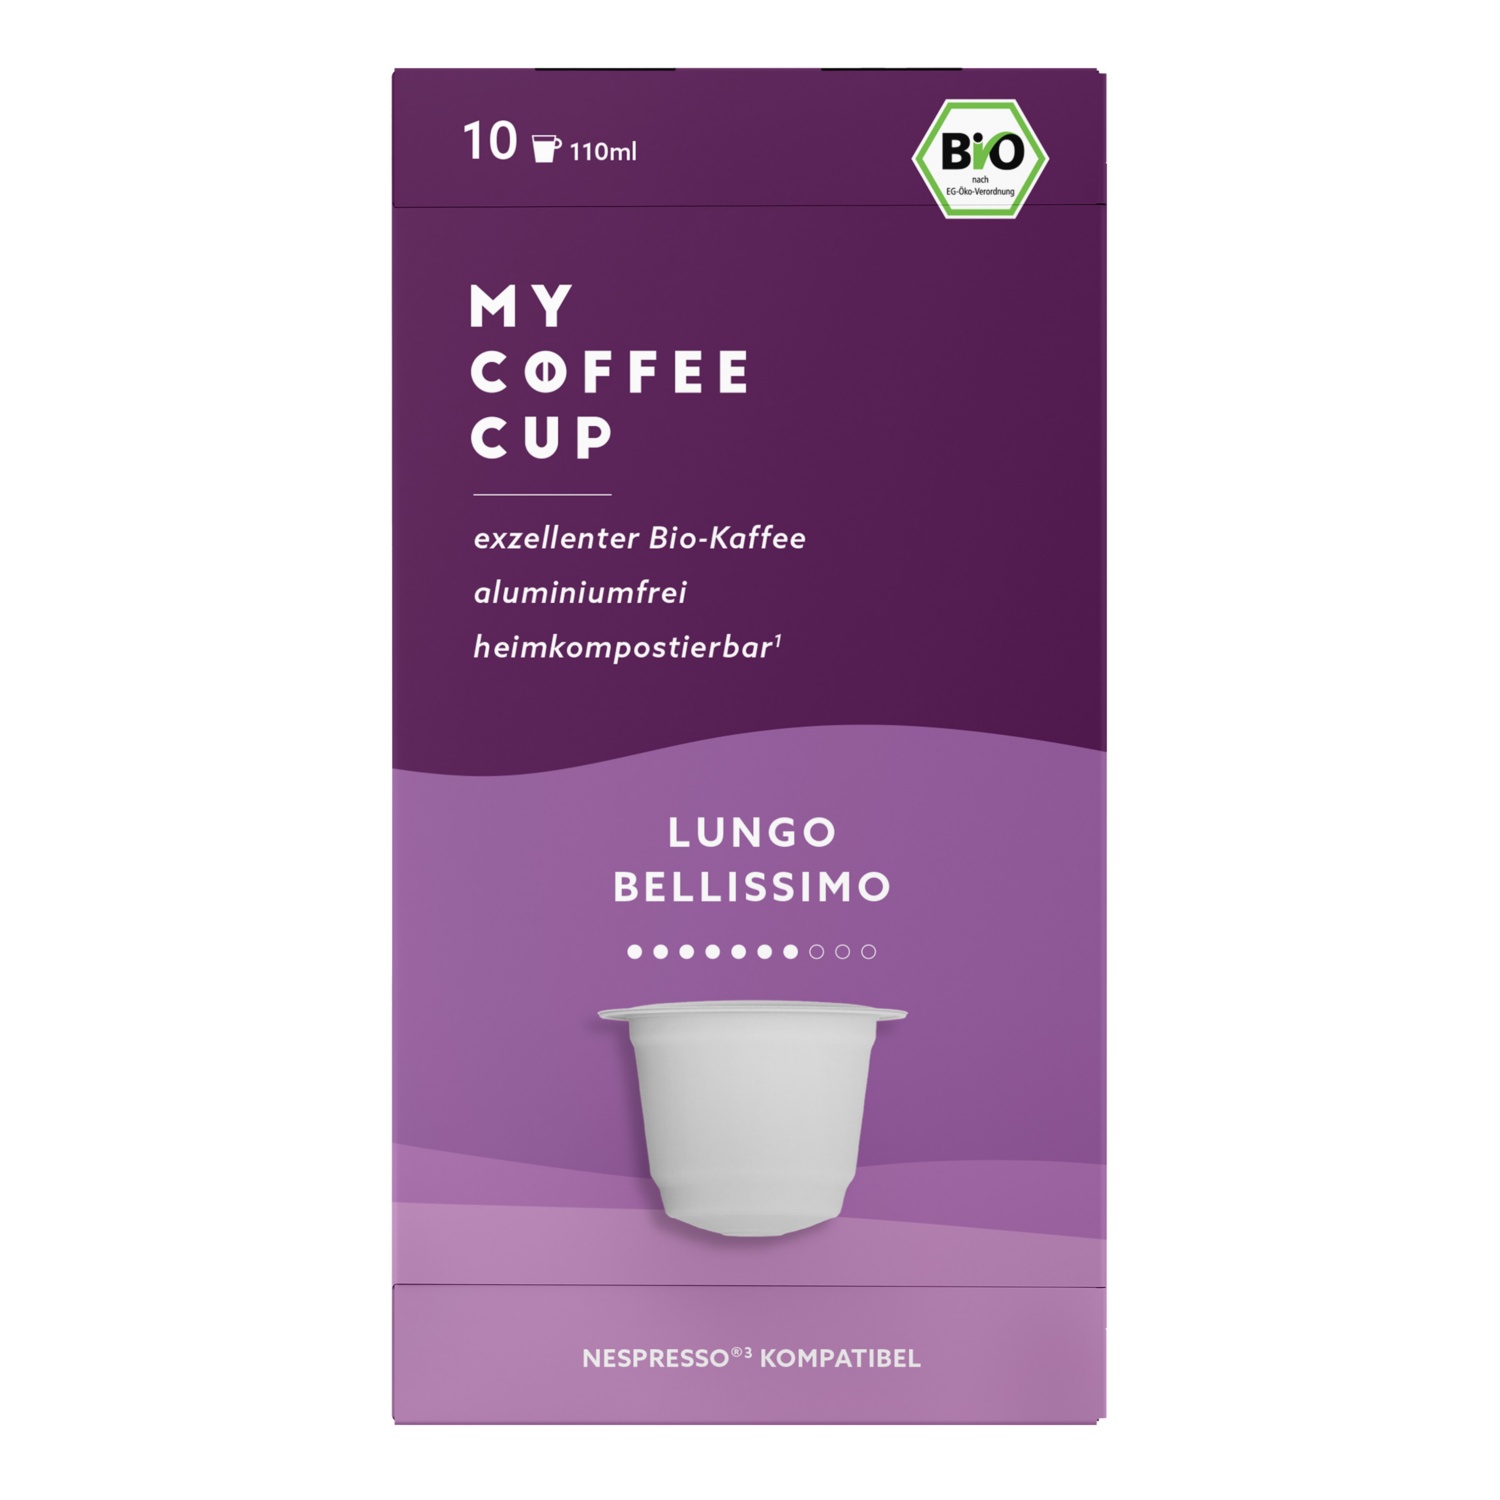 My Coffee Cup Bio-Kaffeekapseln, Lungo Bellissimo